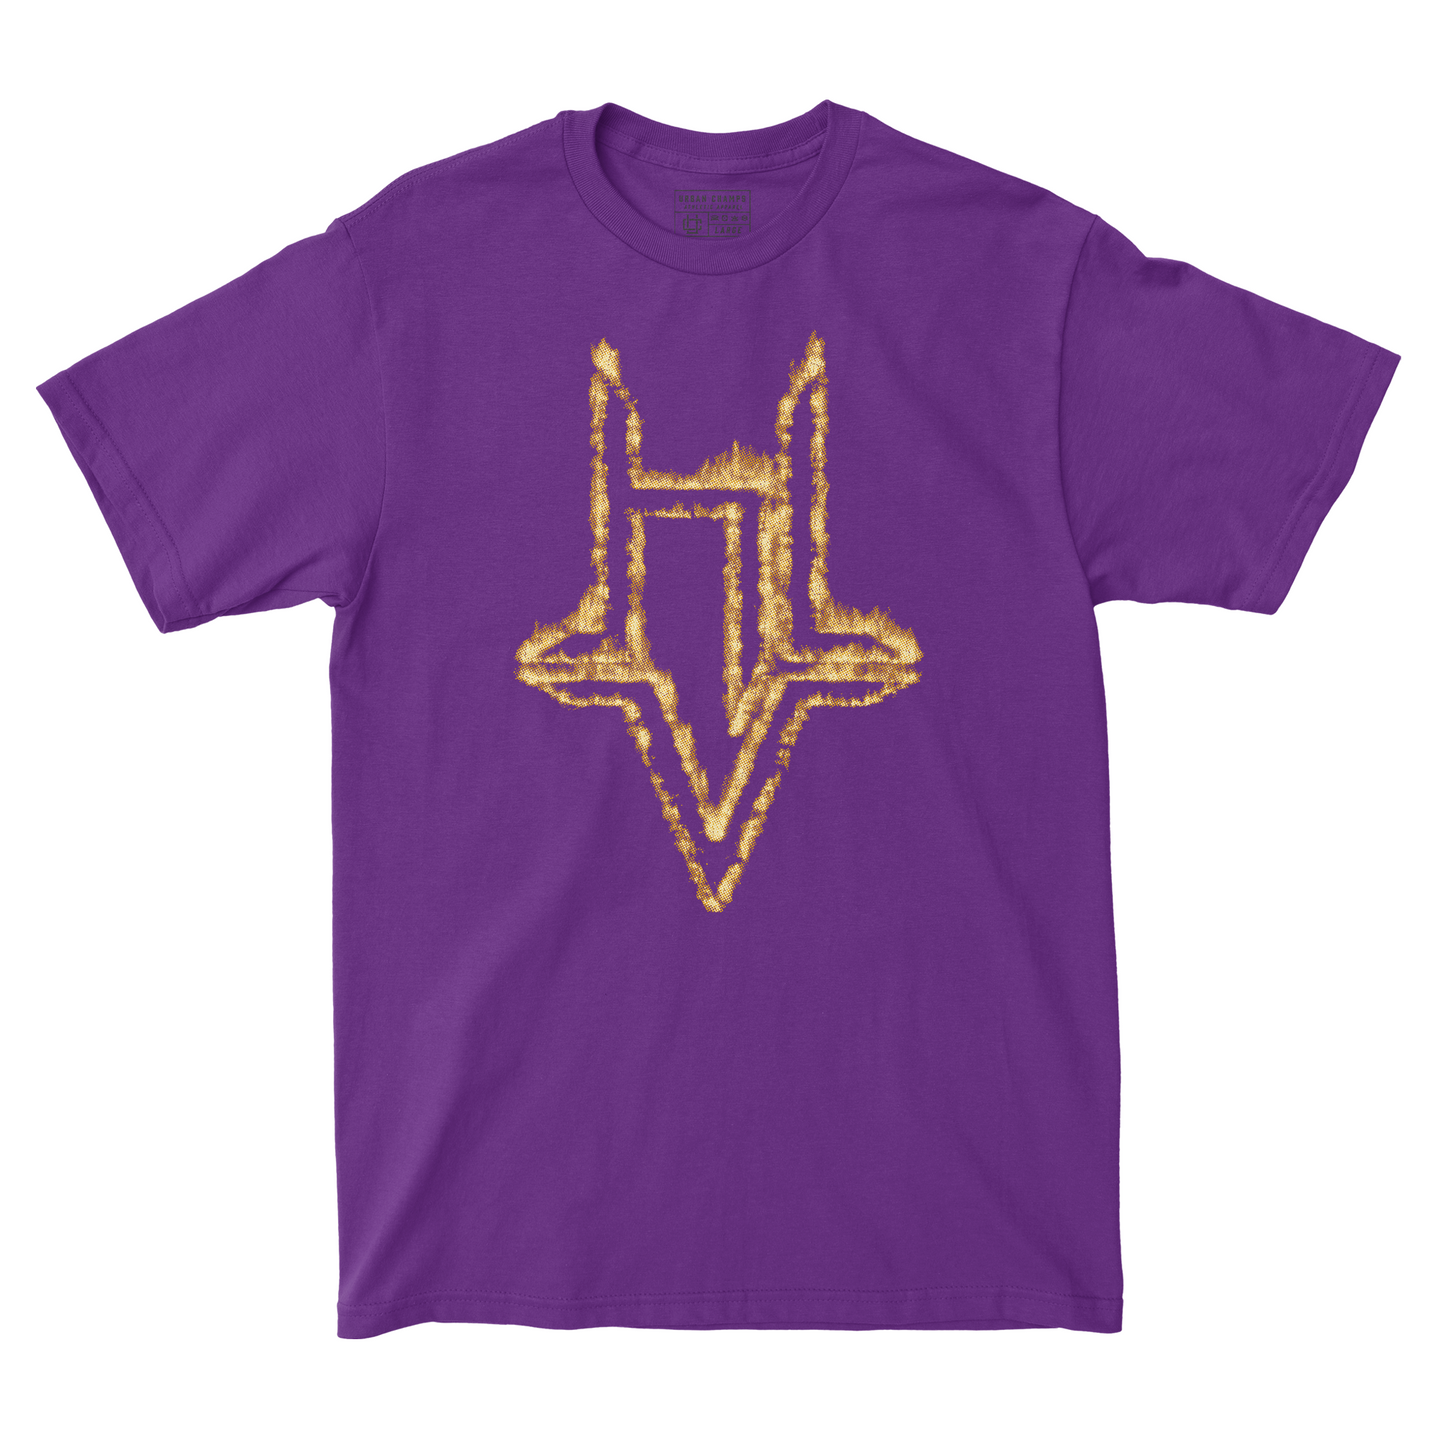 EXCLUSIVE RELEASE: Hailey Van Lith - Flaming Logo Purple Tee